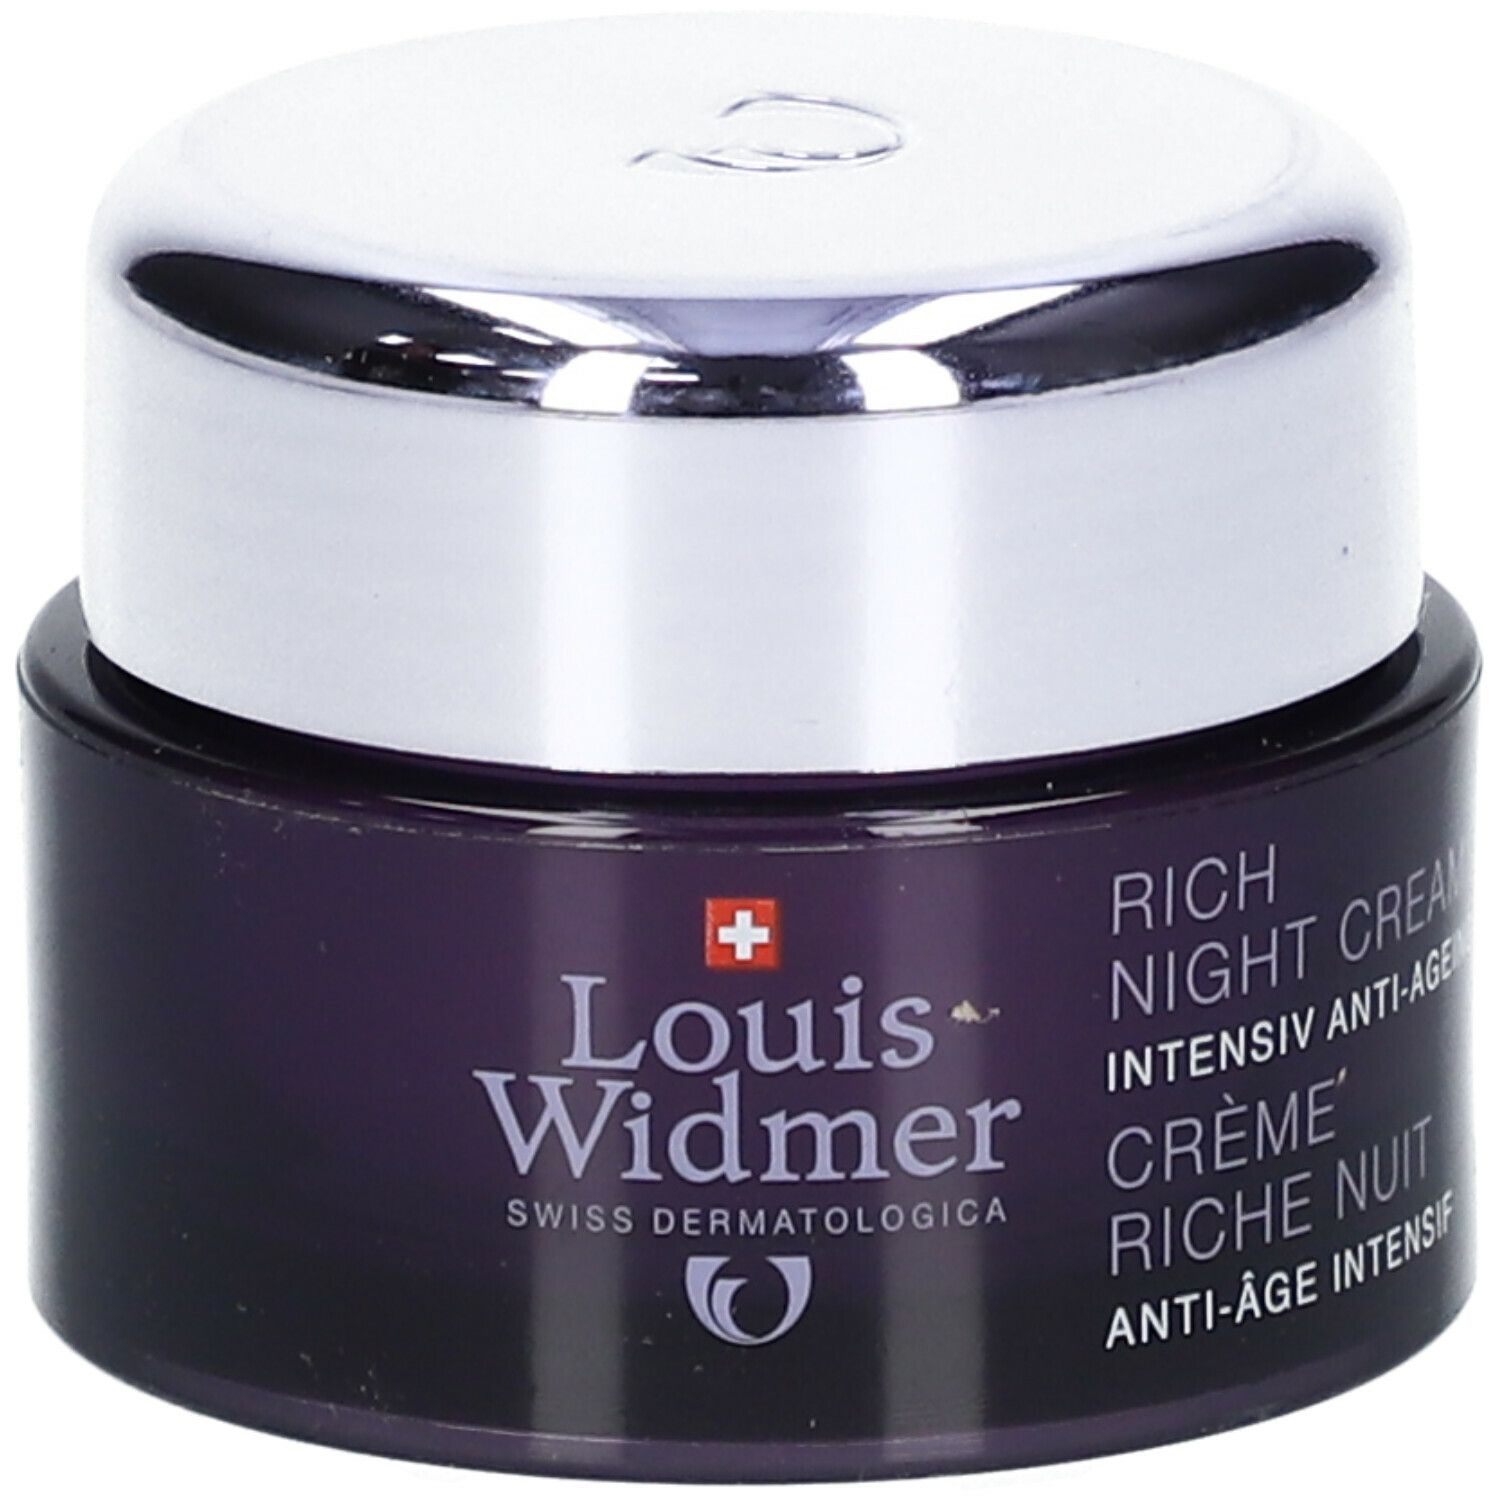 Louis Widmer Rich Night Cream unparfümiert